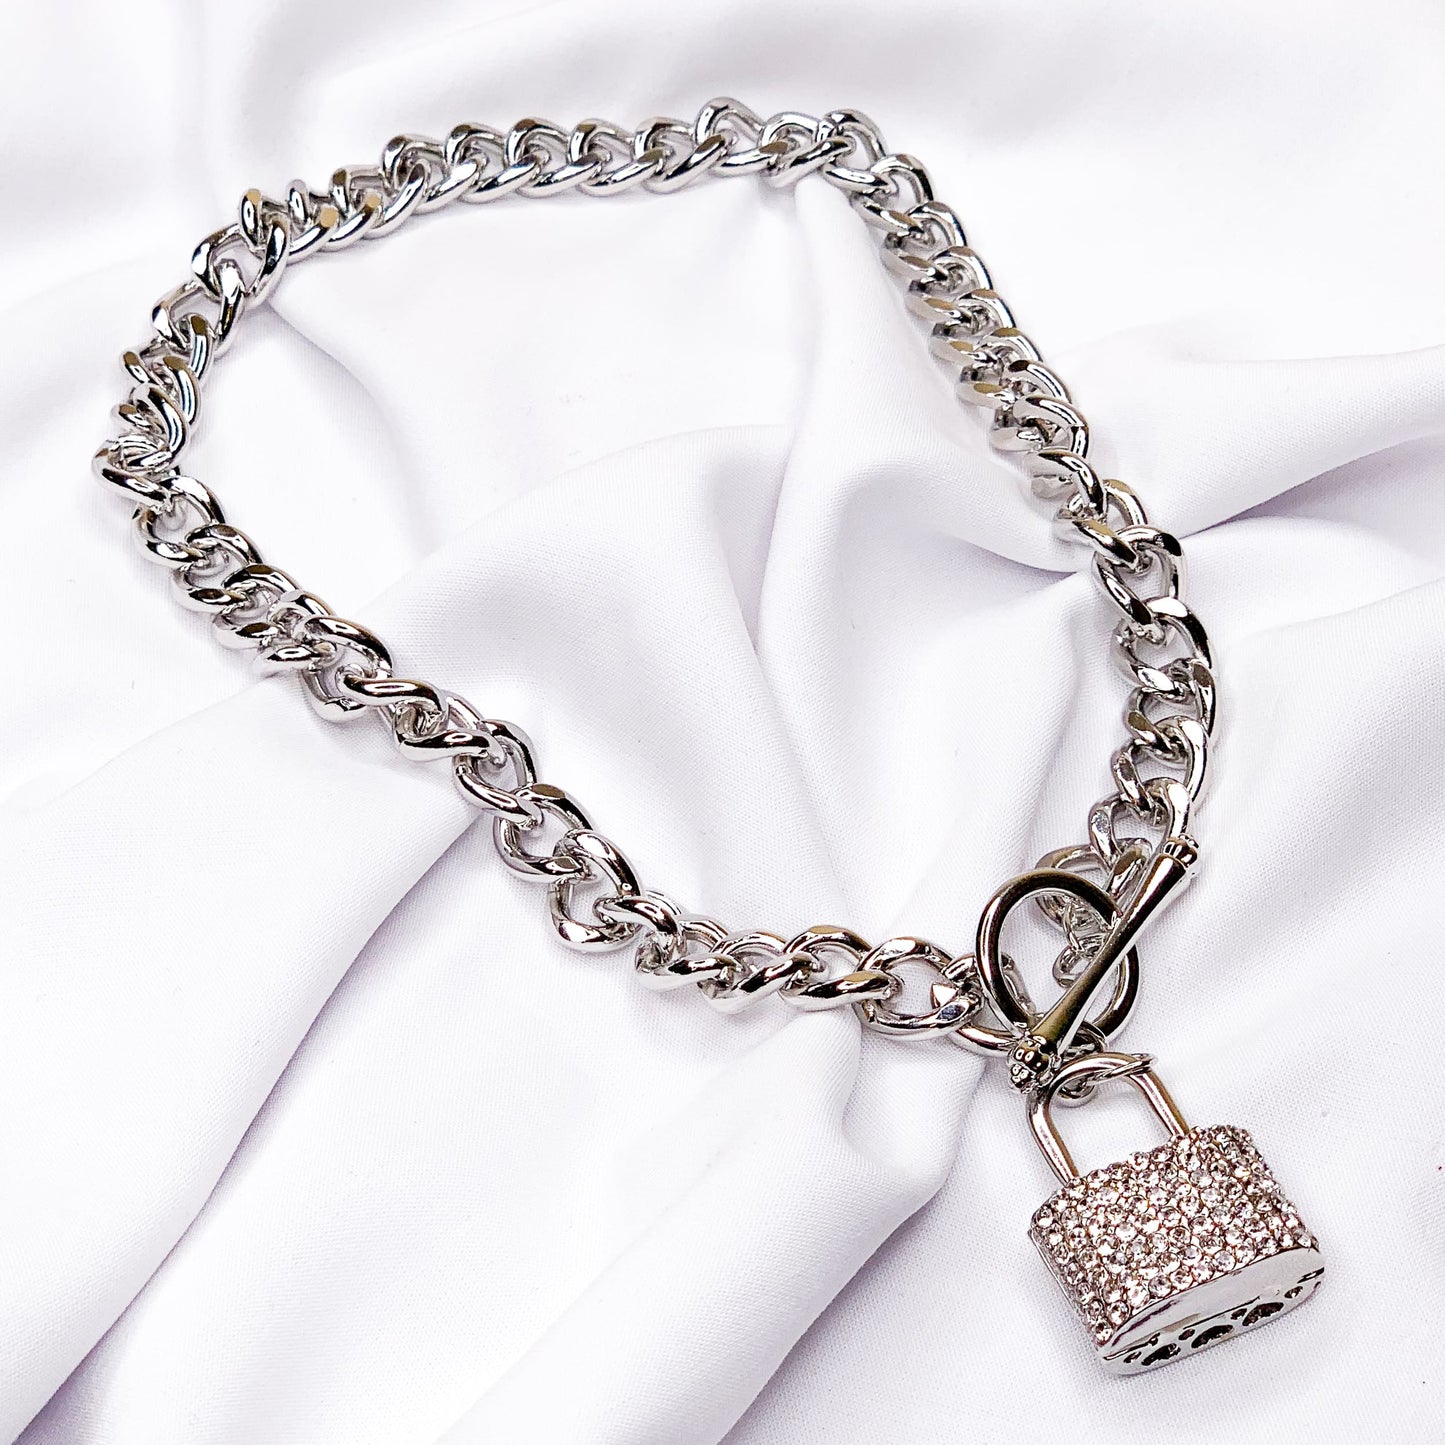 Hellen.V - Rhinestone Chain Necklace Lock Pendant